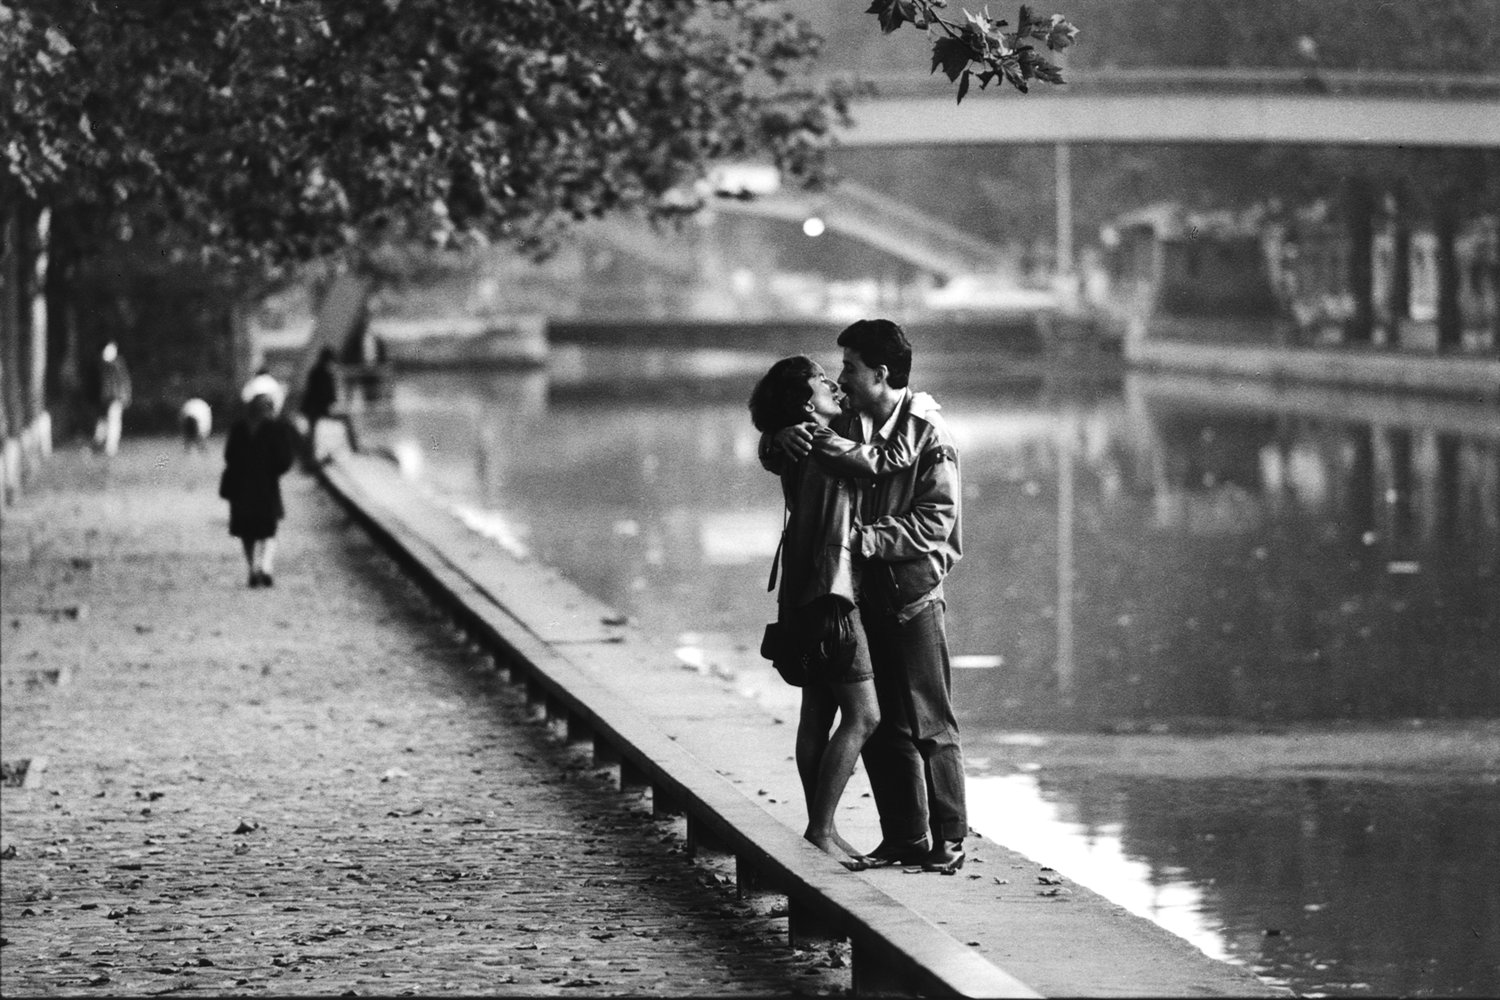 Пар 50 история. Питер Тернли фотограф. Робер Дуано беззаботное детство. Поцелуй на мосту. Уличная романтика.